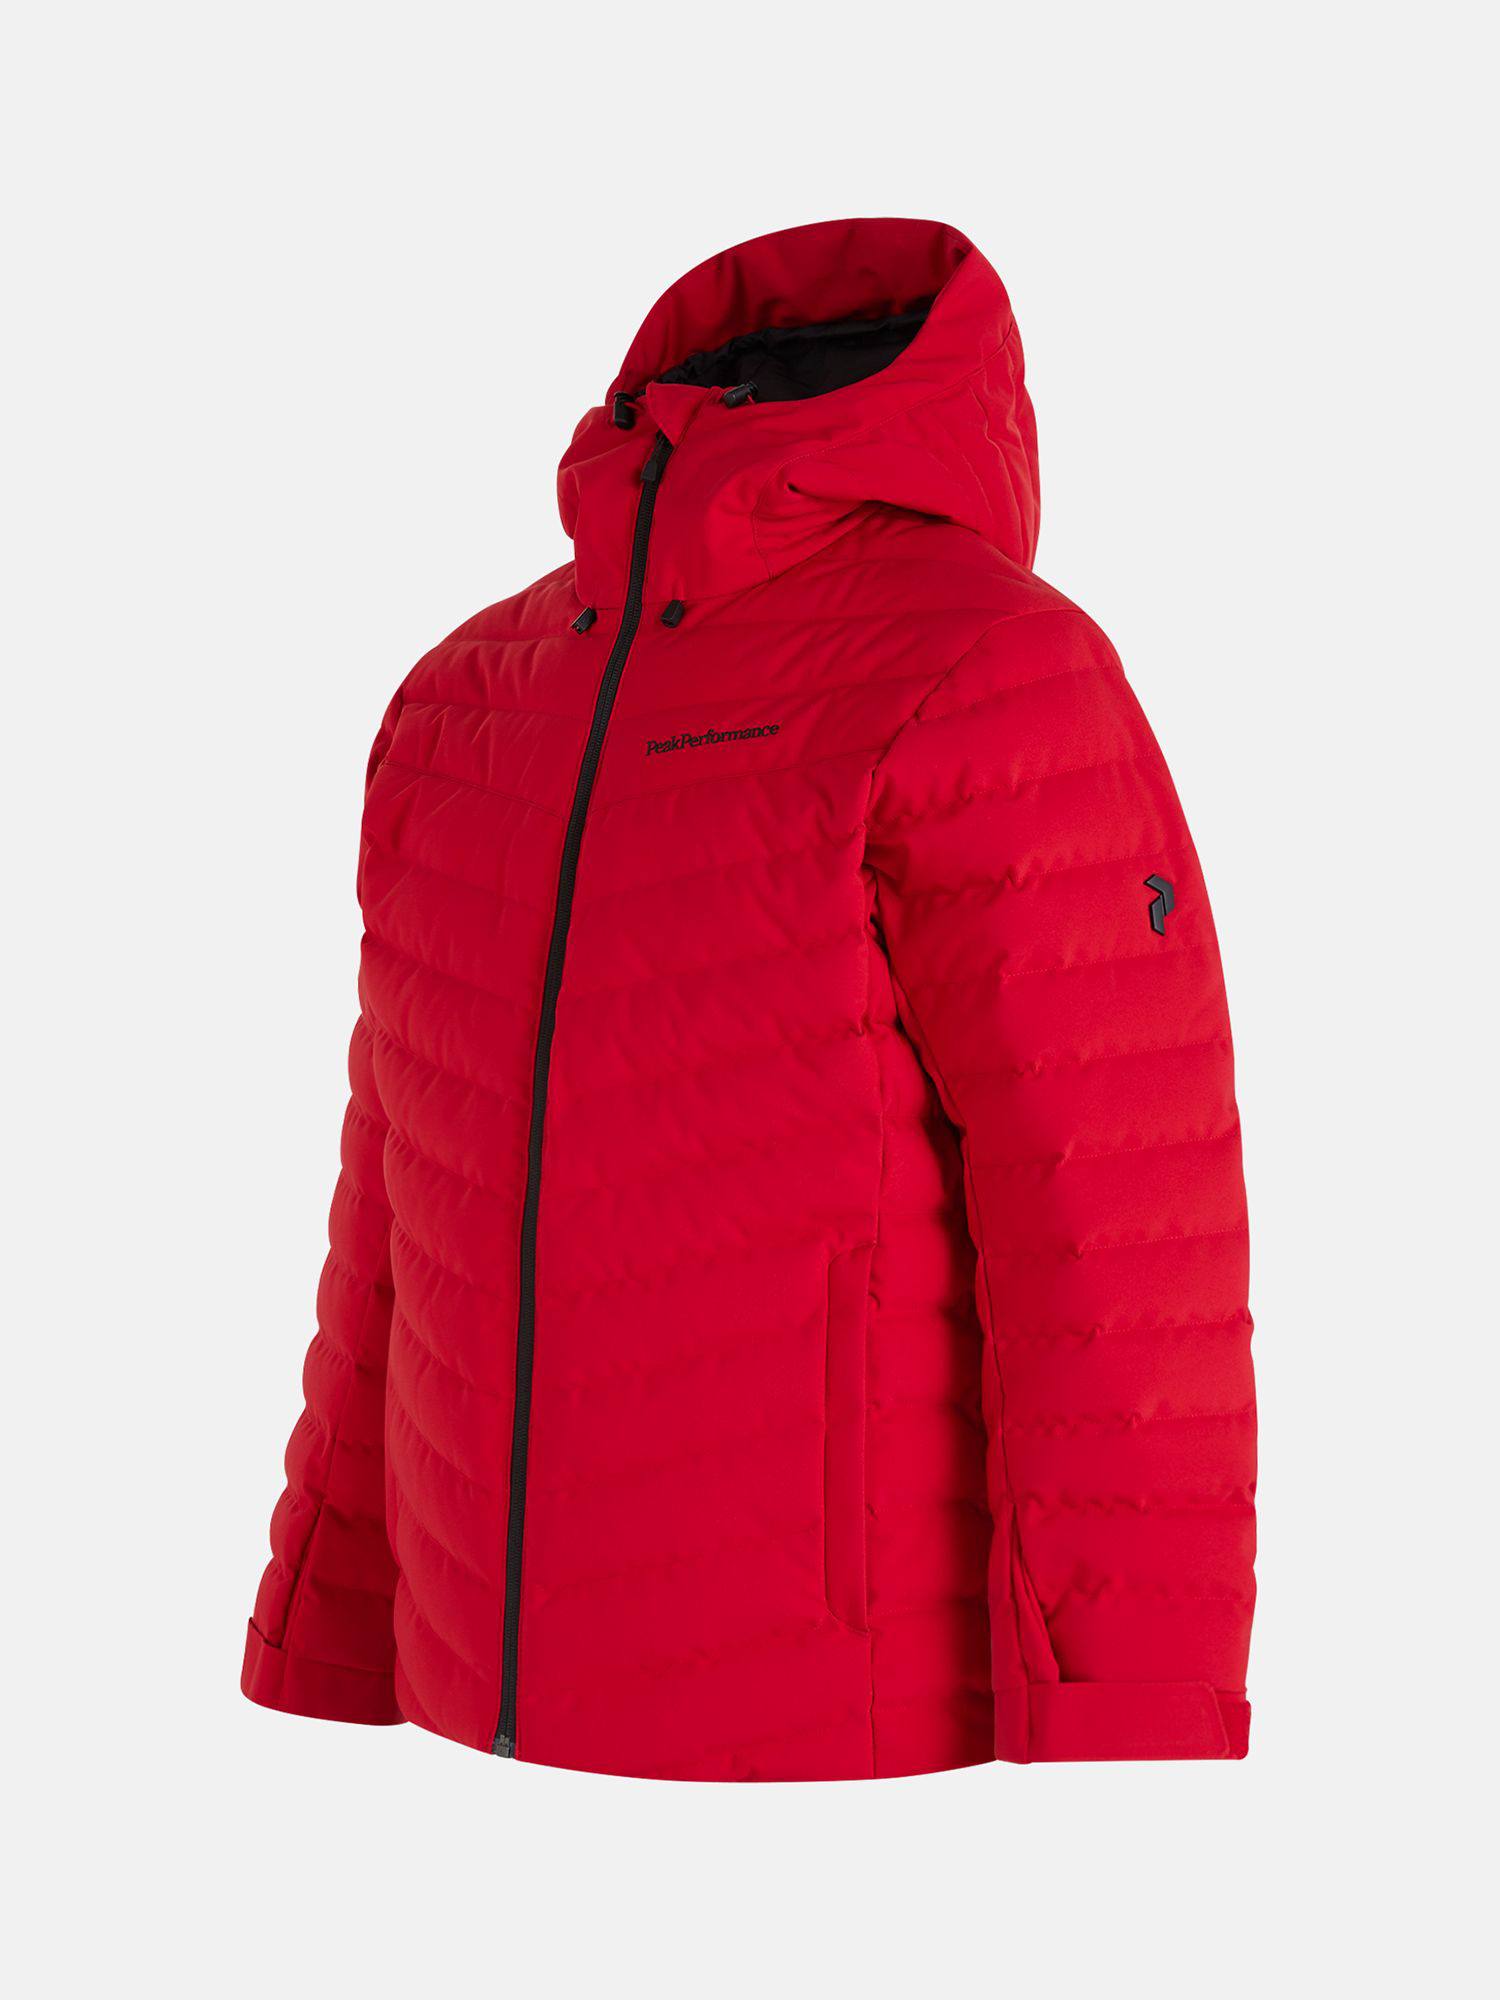 Peak Performance Men’s Frost Ski Jacket Red L